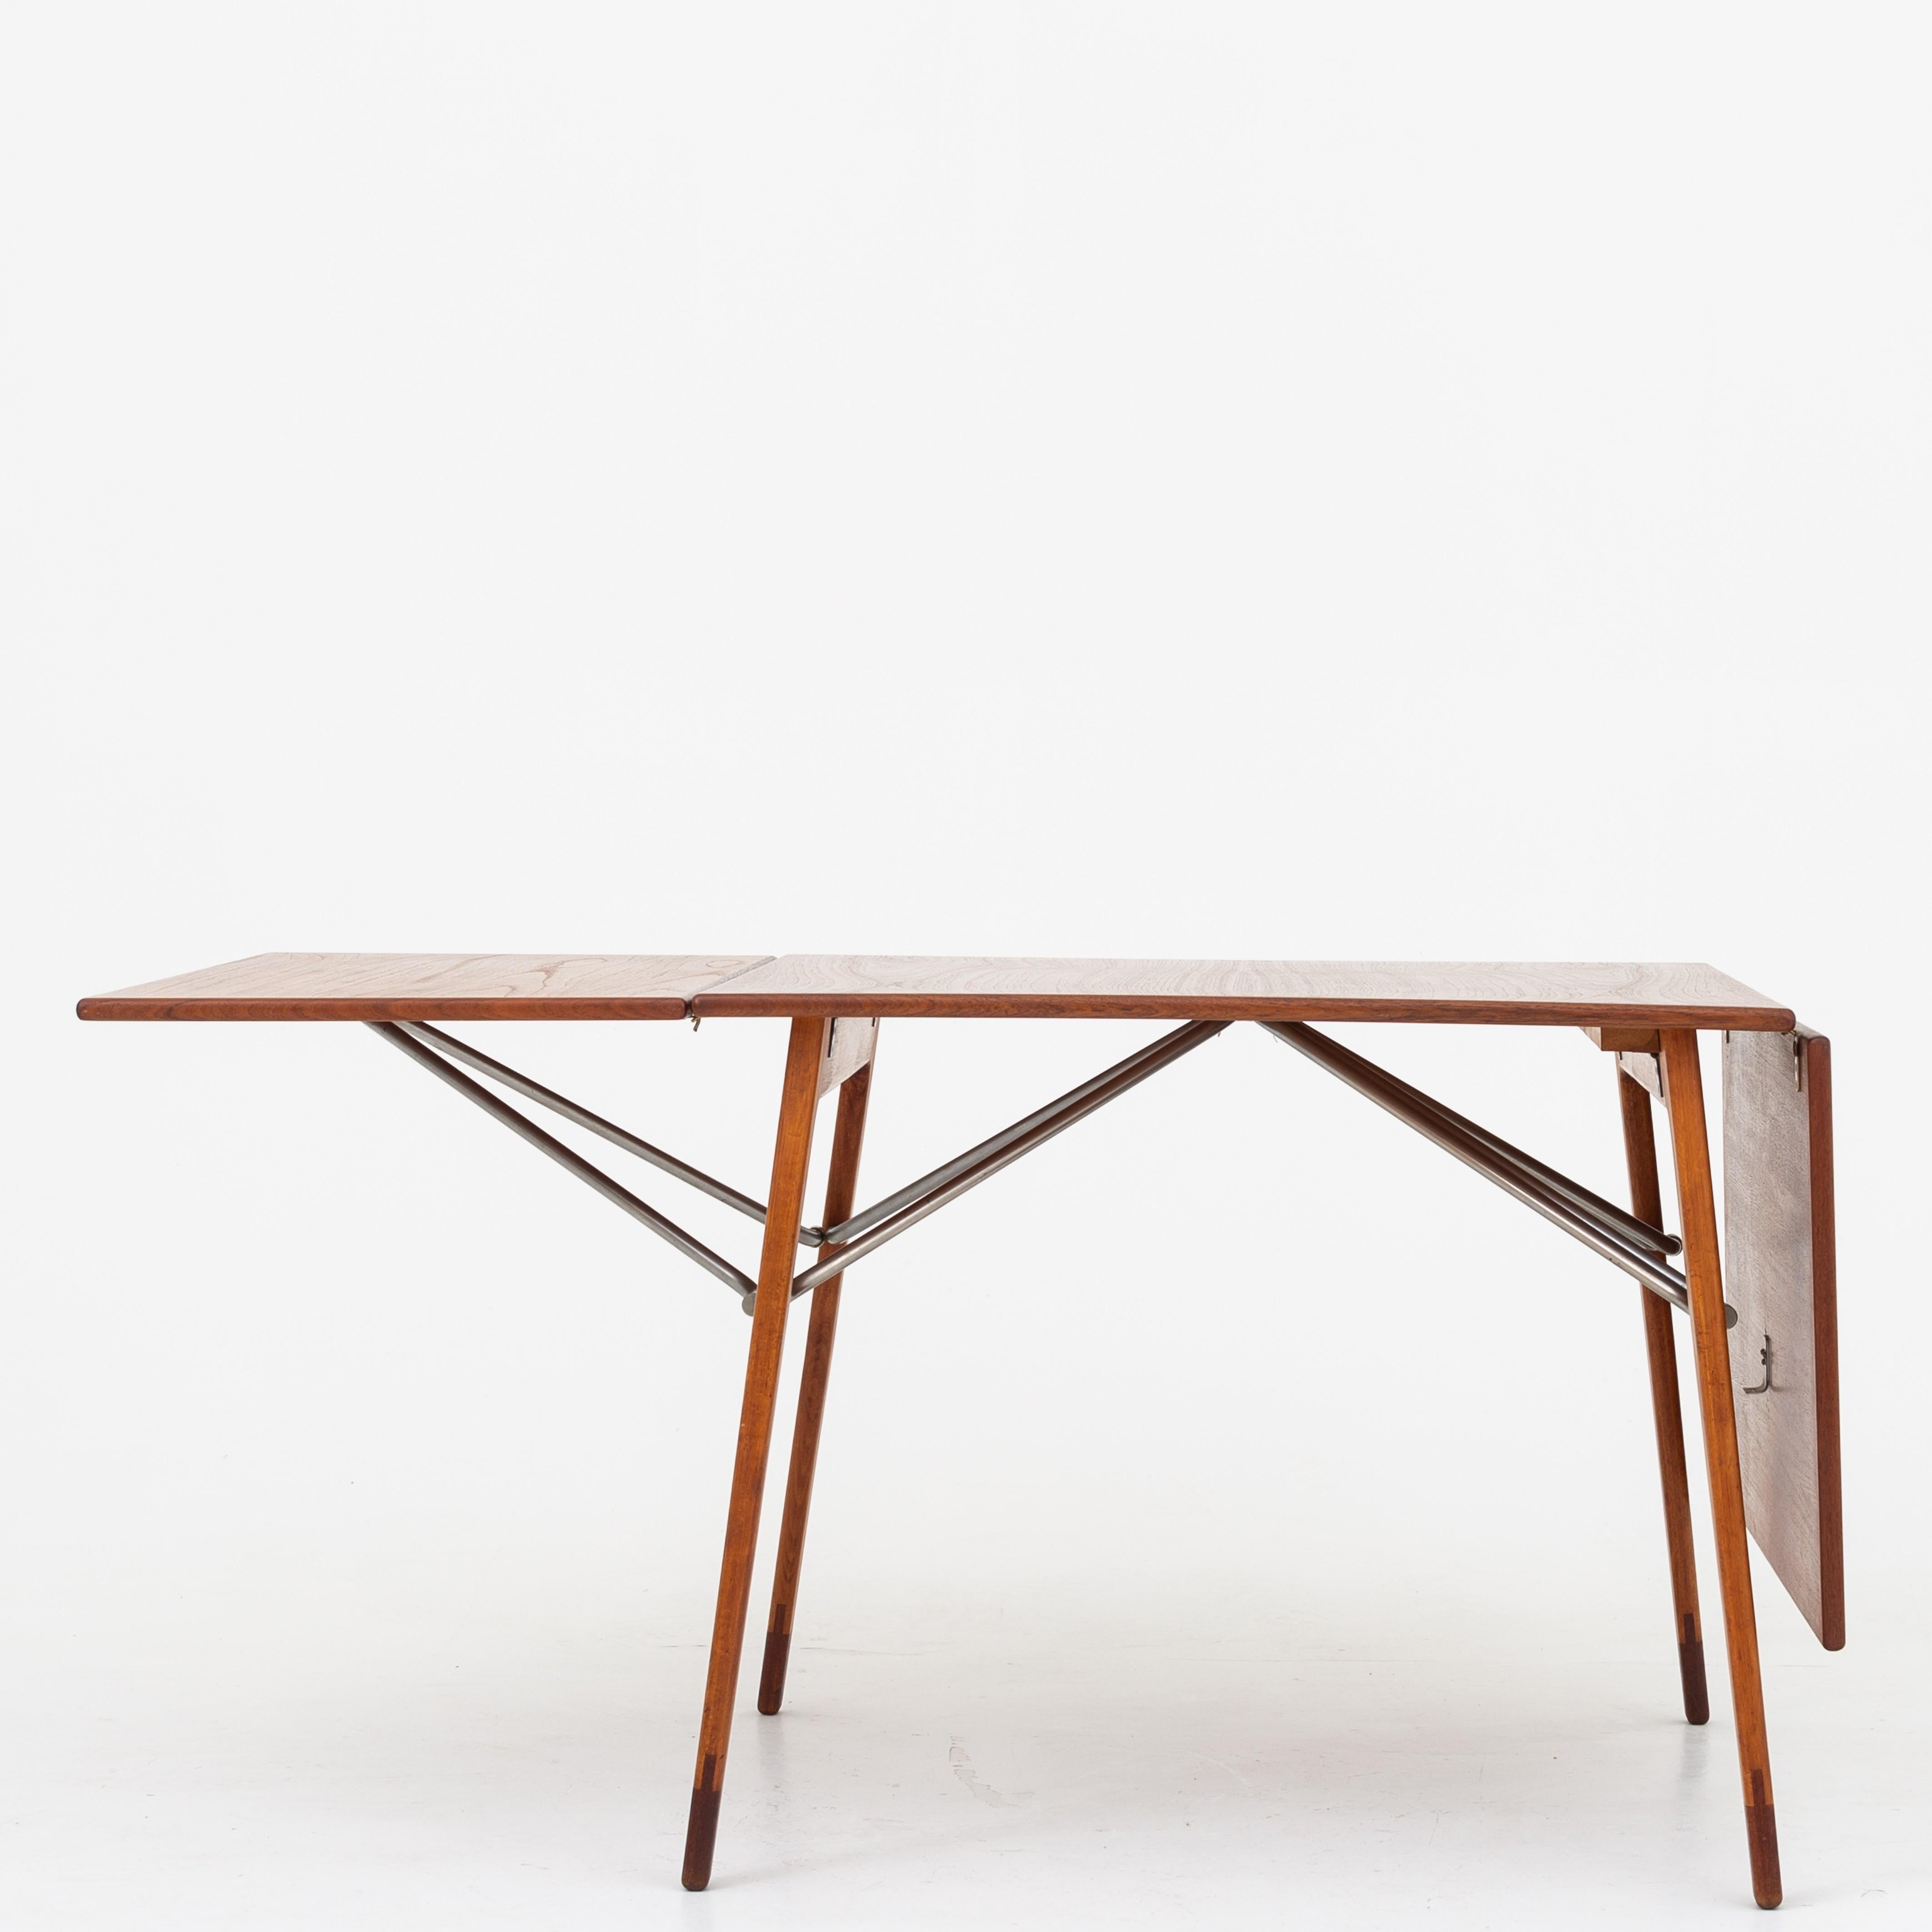 Square dining table or drop-leaf table with beech frame, teak top and teak feet. Steel hangers. Designed in 1952. Maker Søborg Møbelfabrik.